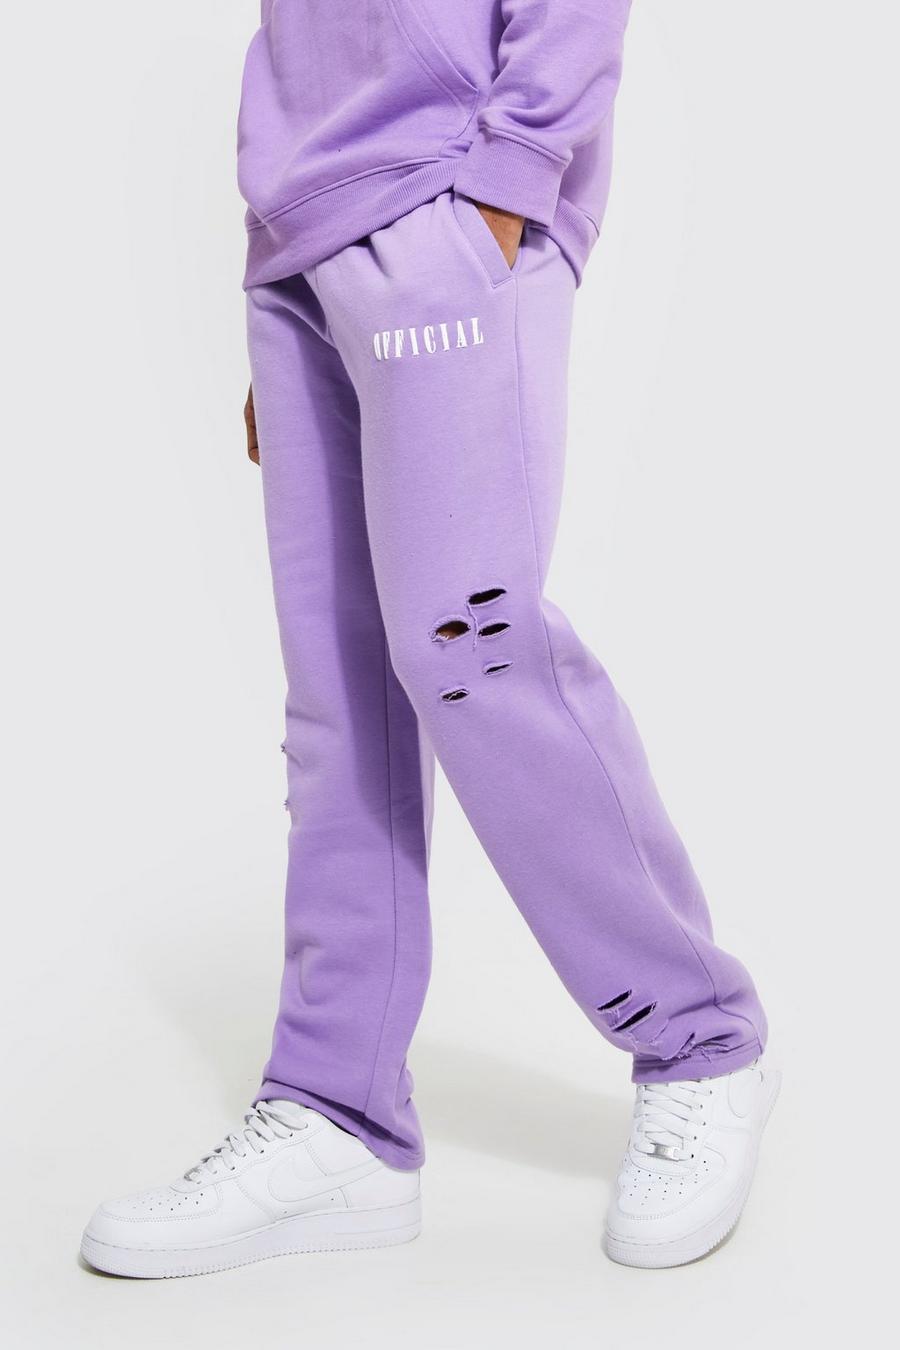 Pantalón deportivo Official oversize de pernera ancha desgastado, Lilac viola